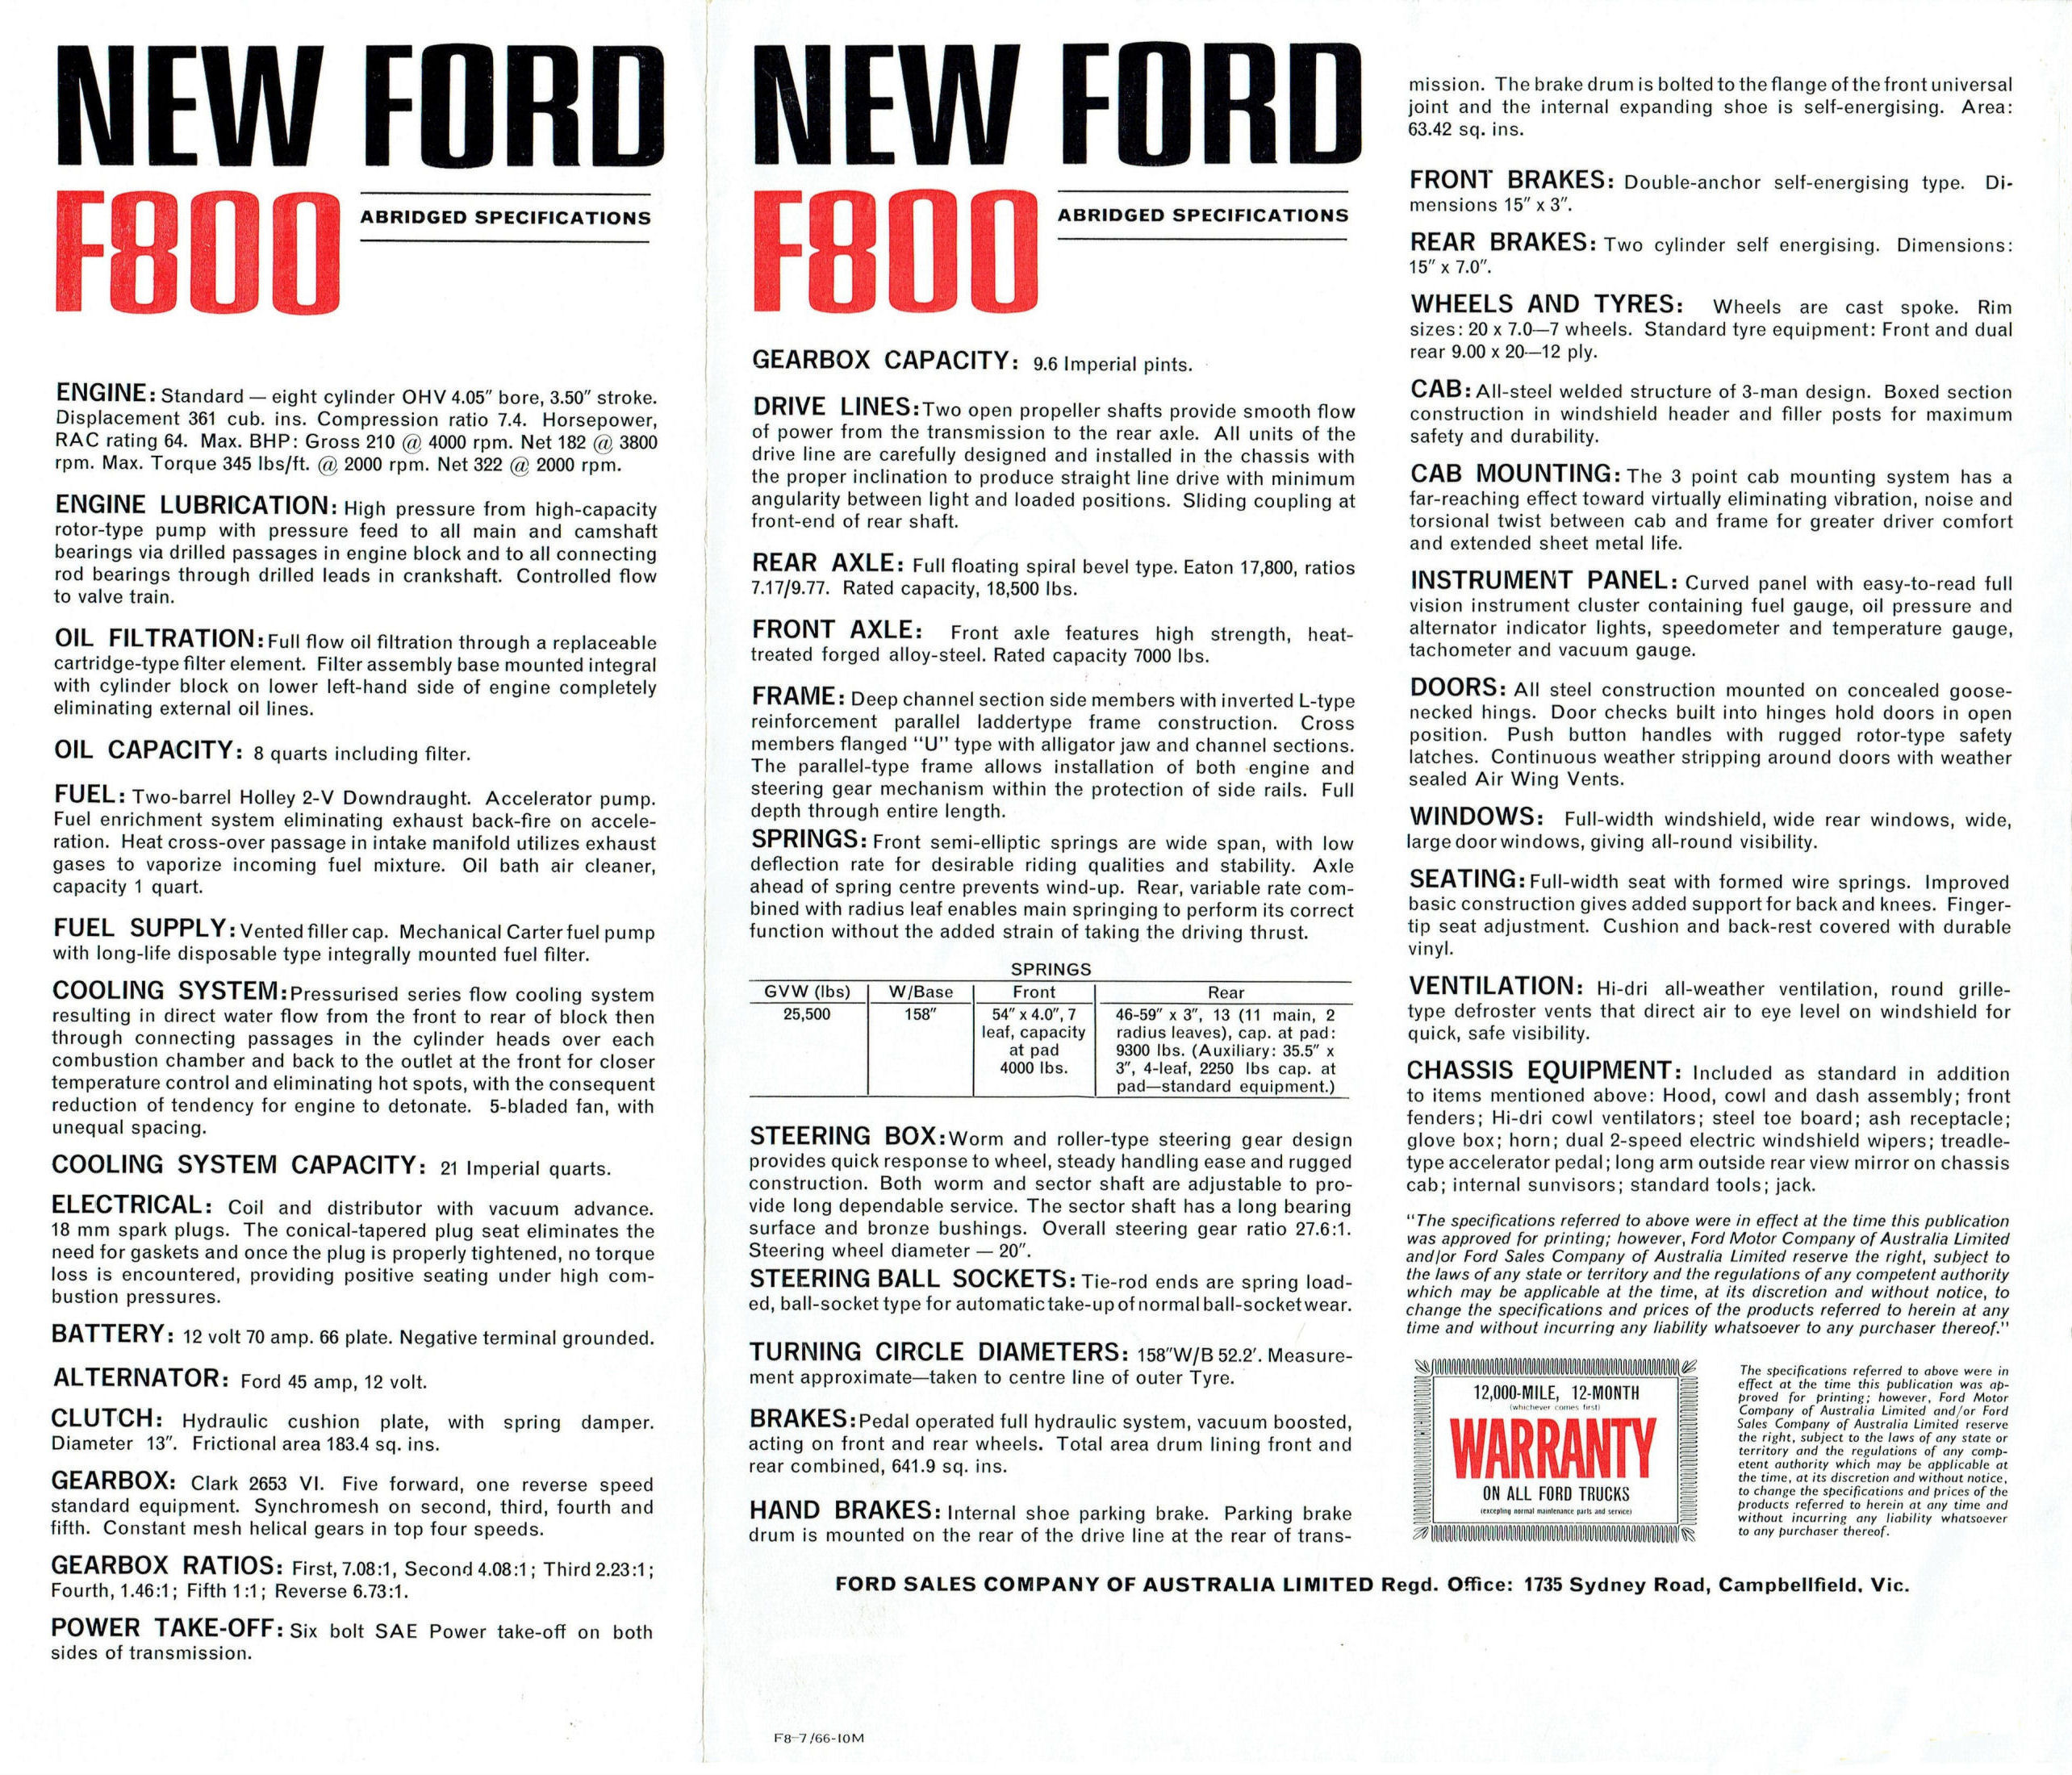 1966 Ford F800 Truck (Aus)-04.jpg-2022-12-7 13.20.36